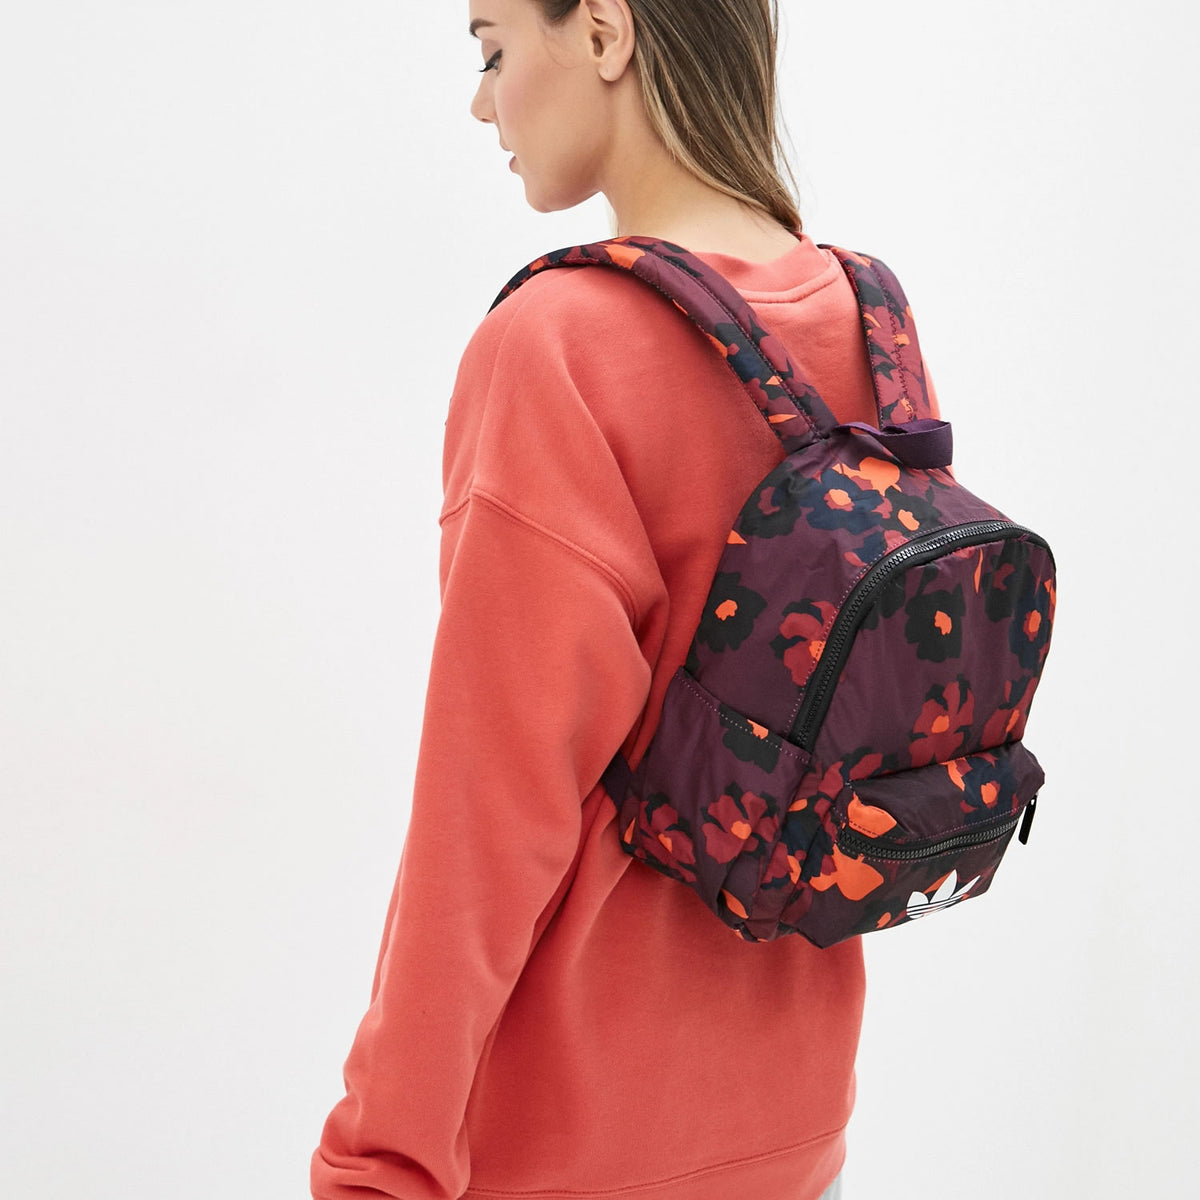 Adidas x Her Studio London Backpack GD1854